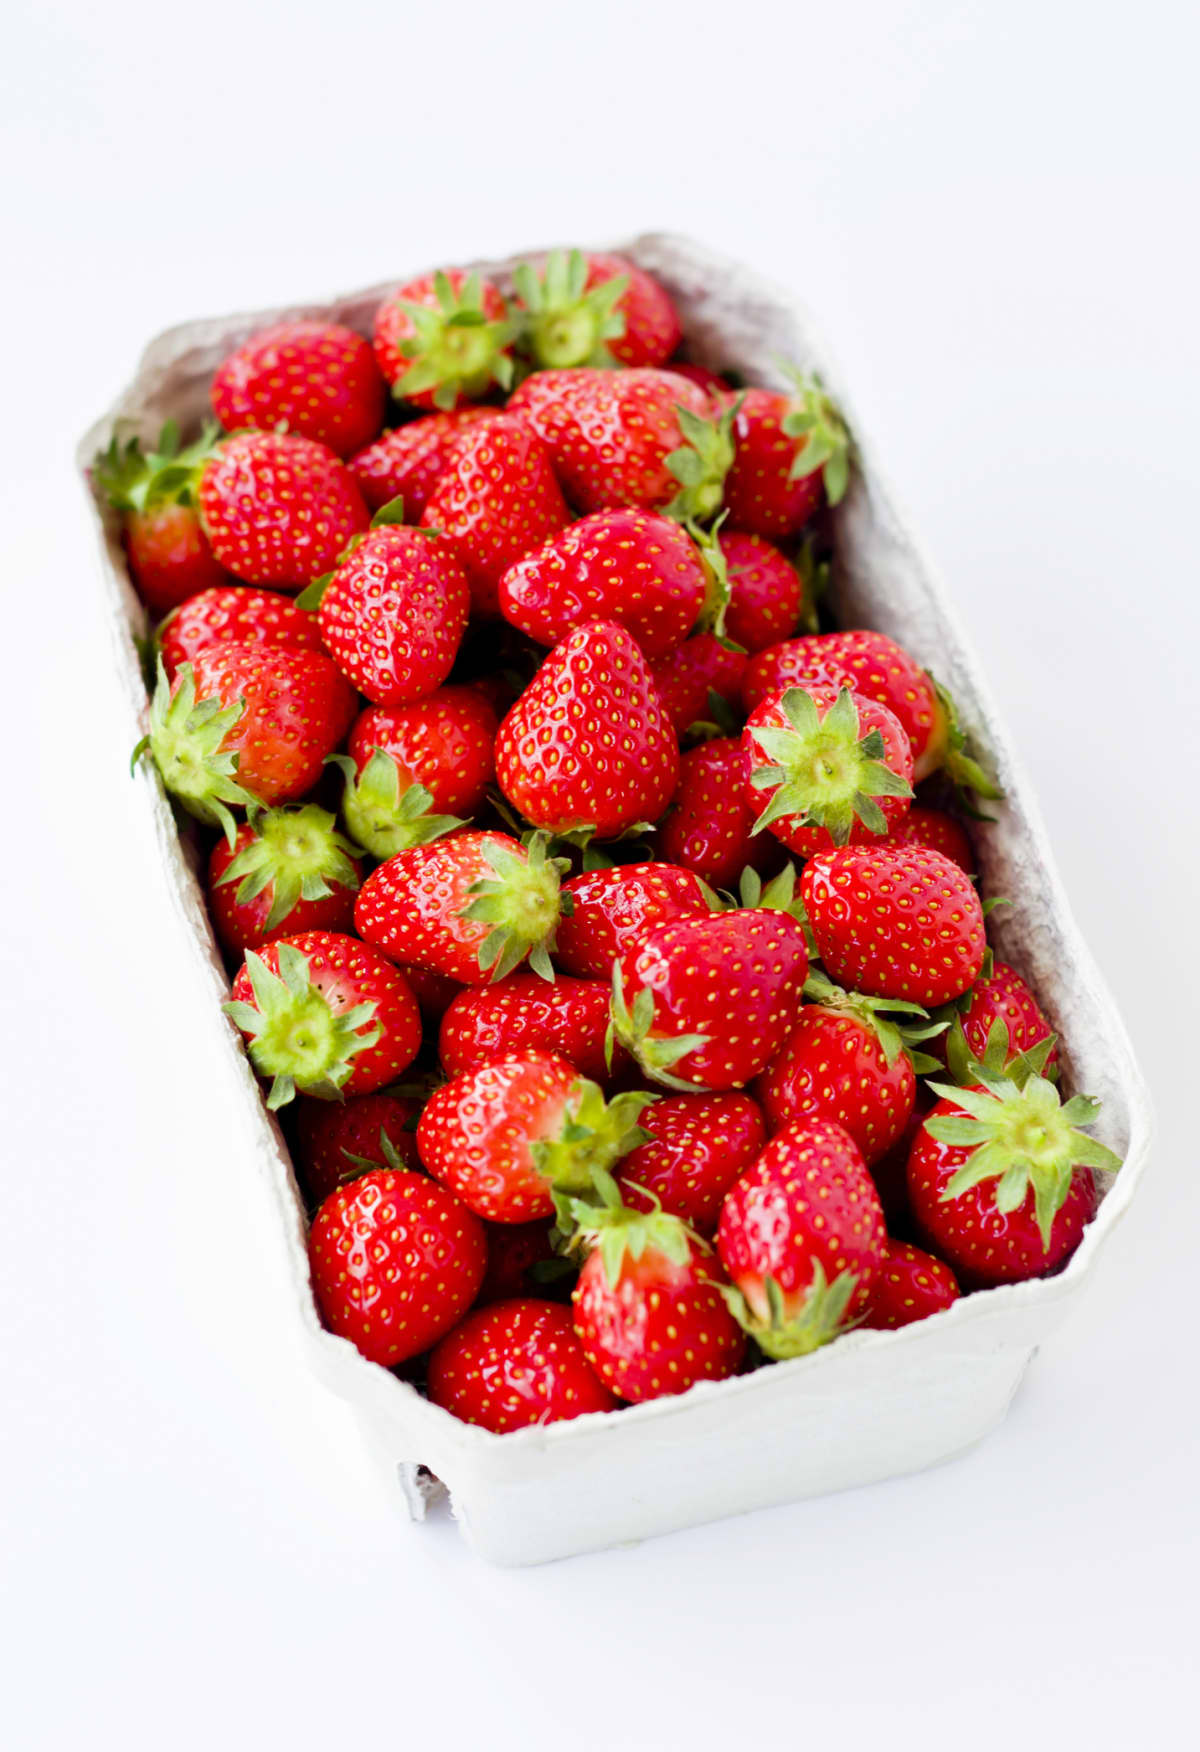 Strawberries in a cardboard box